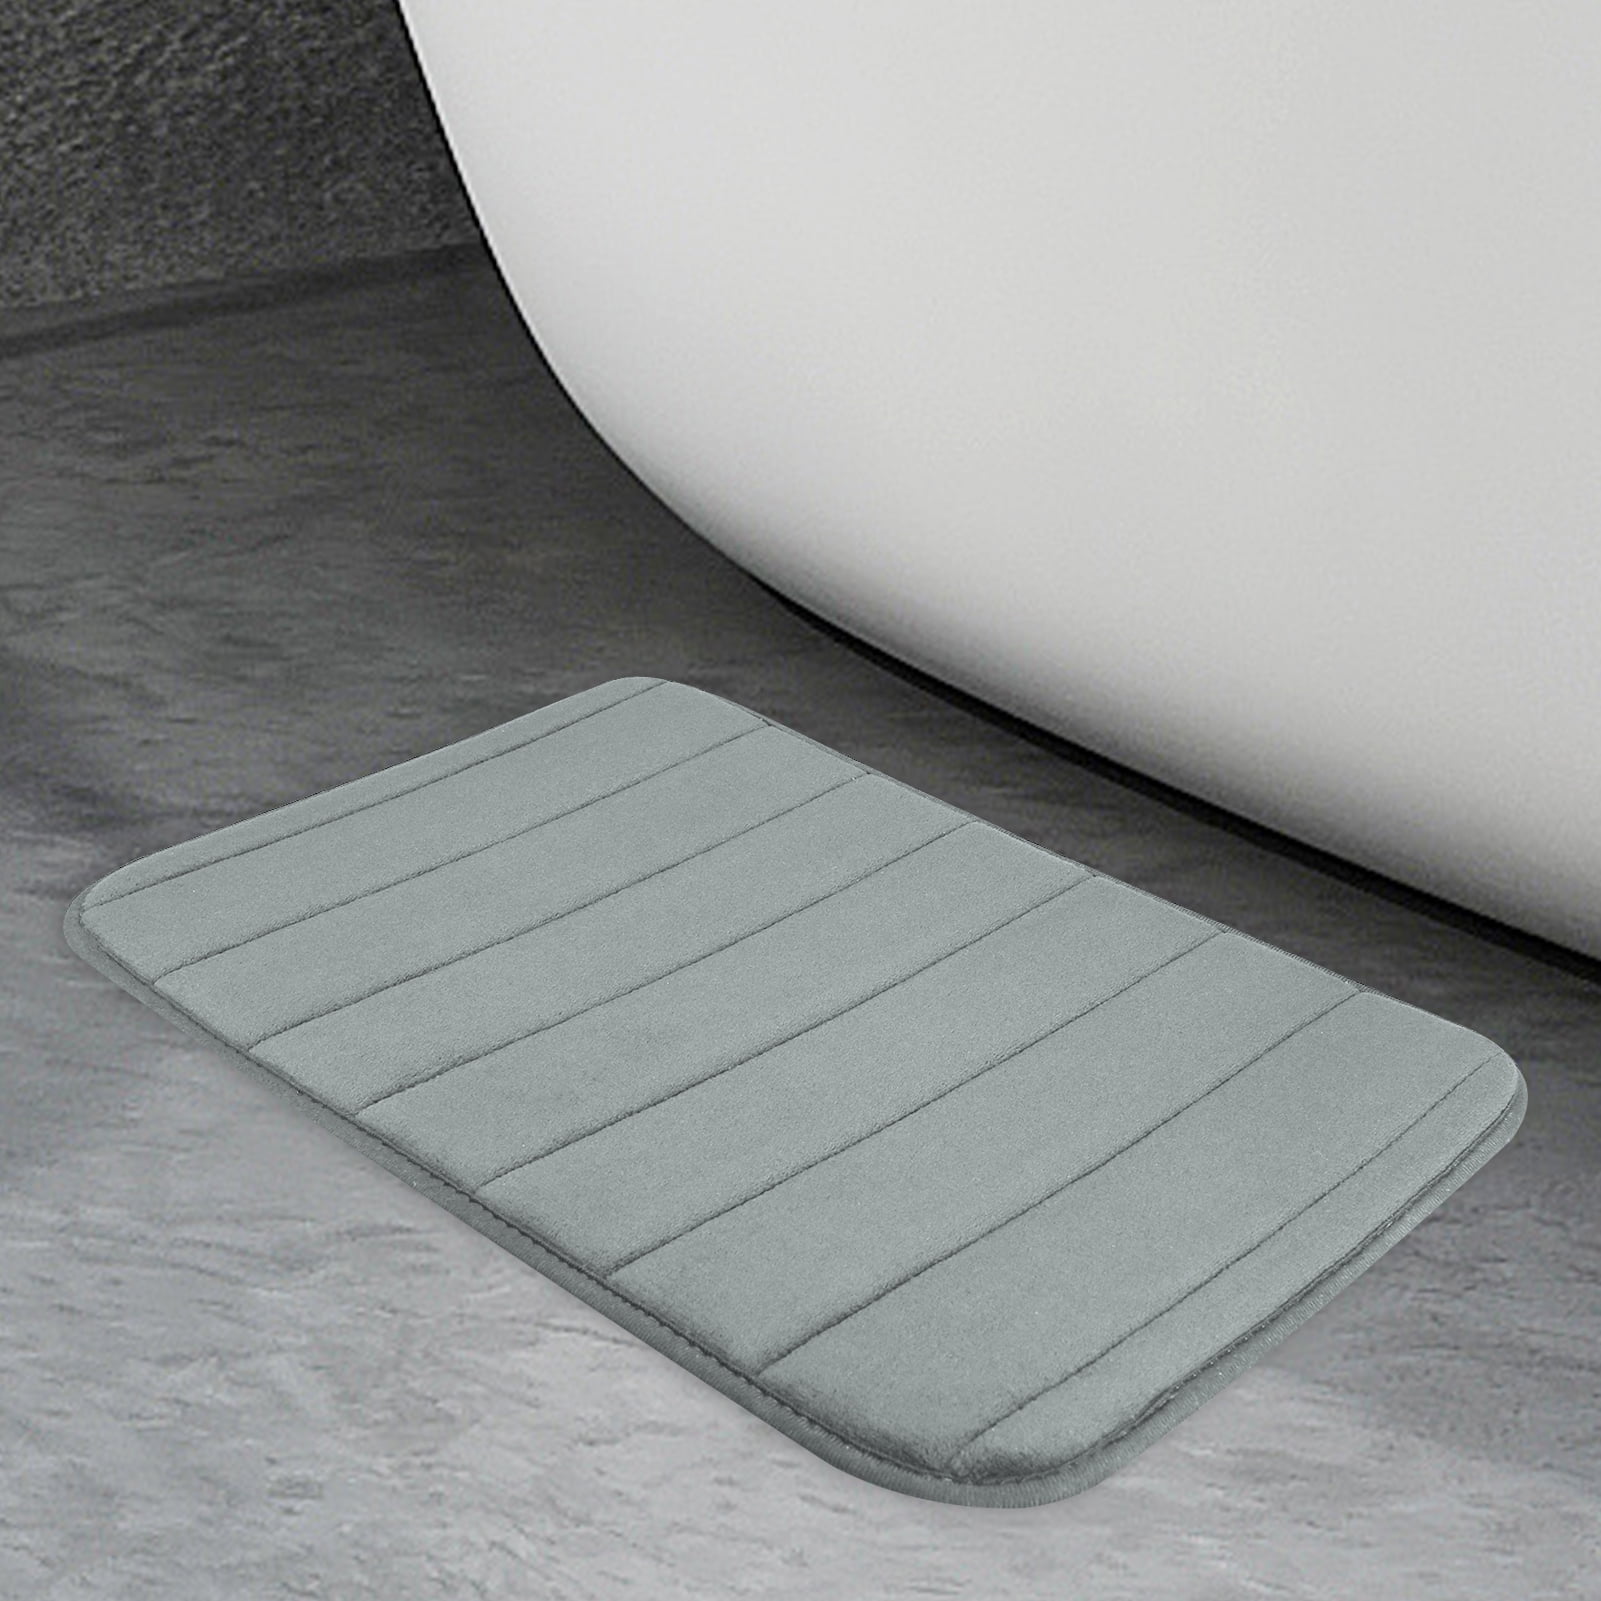 MAYSHINE Memory Foam Non Slip Anti Fatigue Bath Mat | Thick Absorbent Plush  Velvet Bathroom Rug - Machine Washable, 17x24, Charcoal Gray